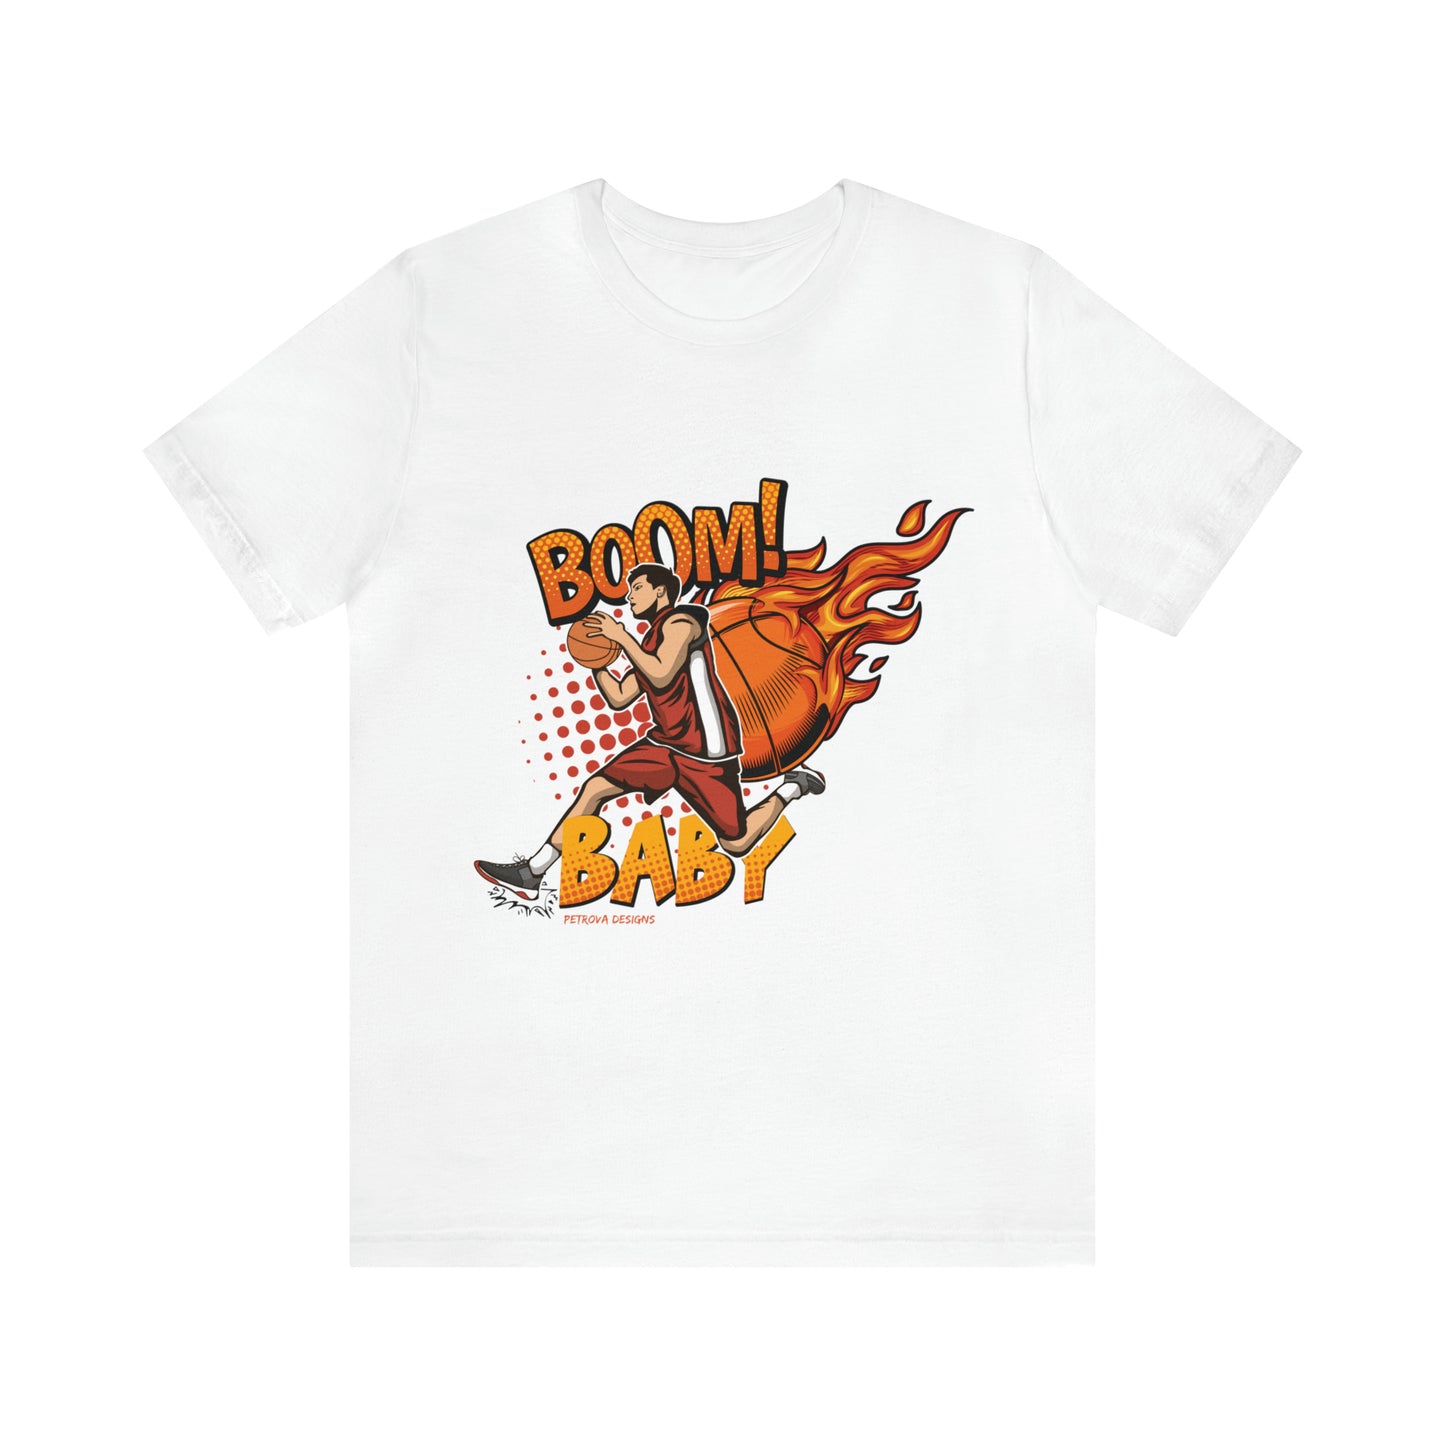 T-Shirt Tshirt Design Gift for Friend and Family Short Sleeved Shirt Basketball Petrova Designs